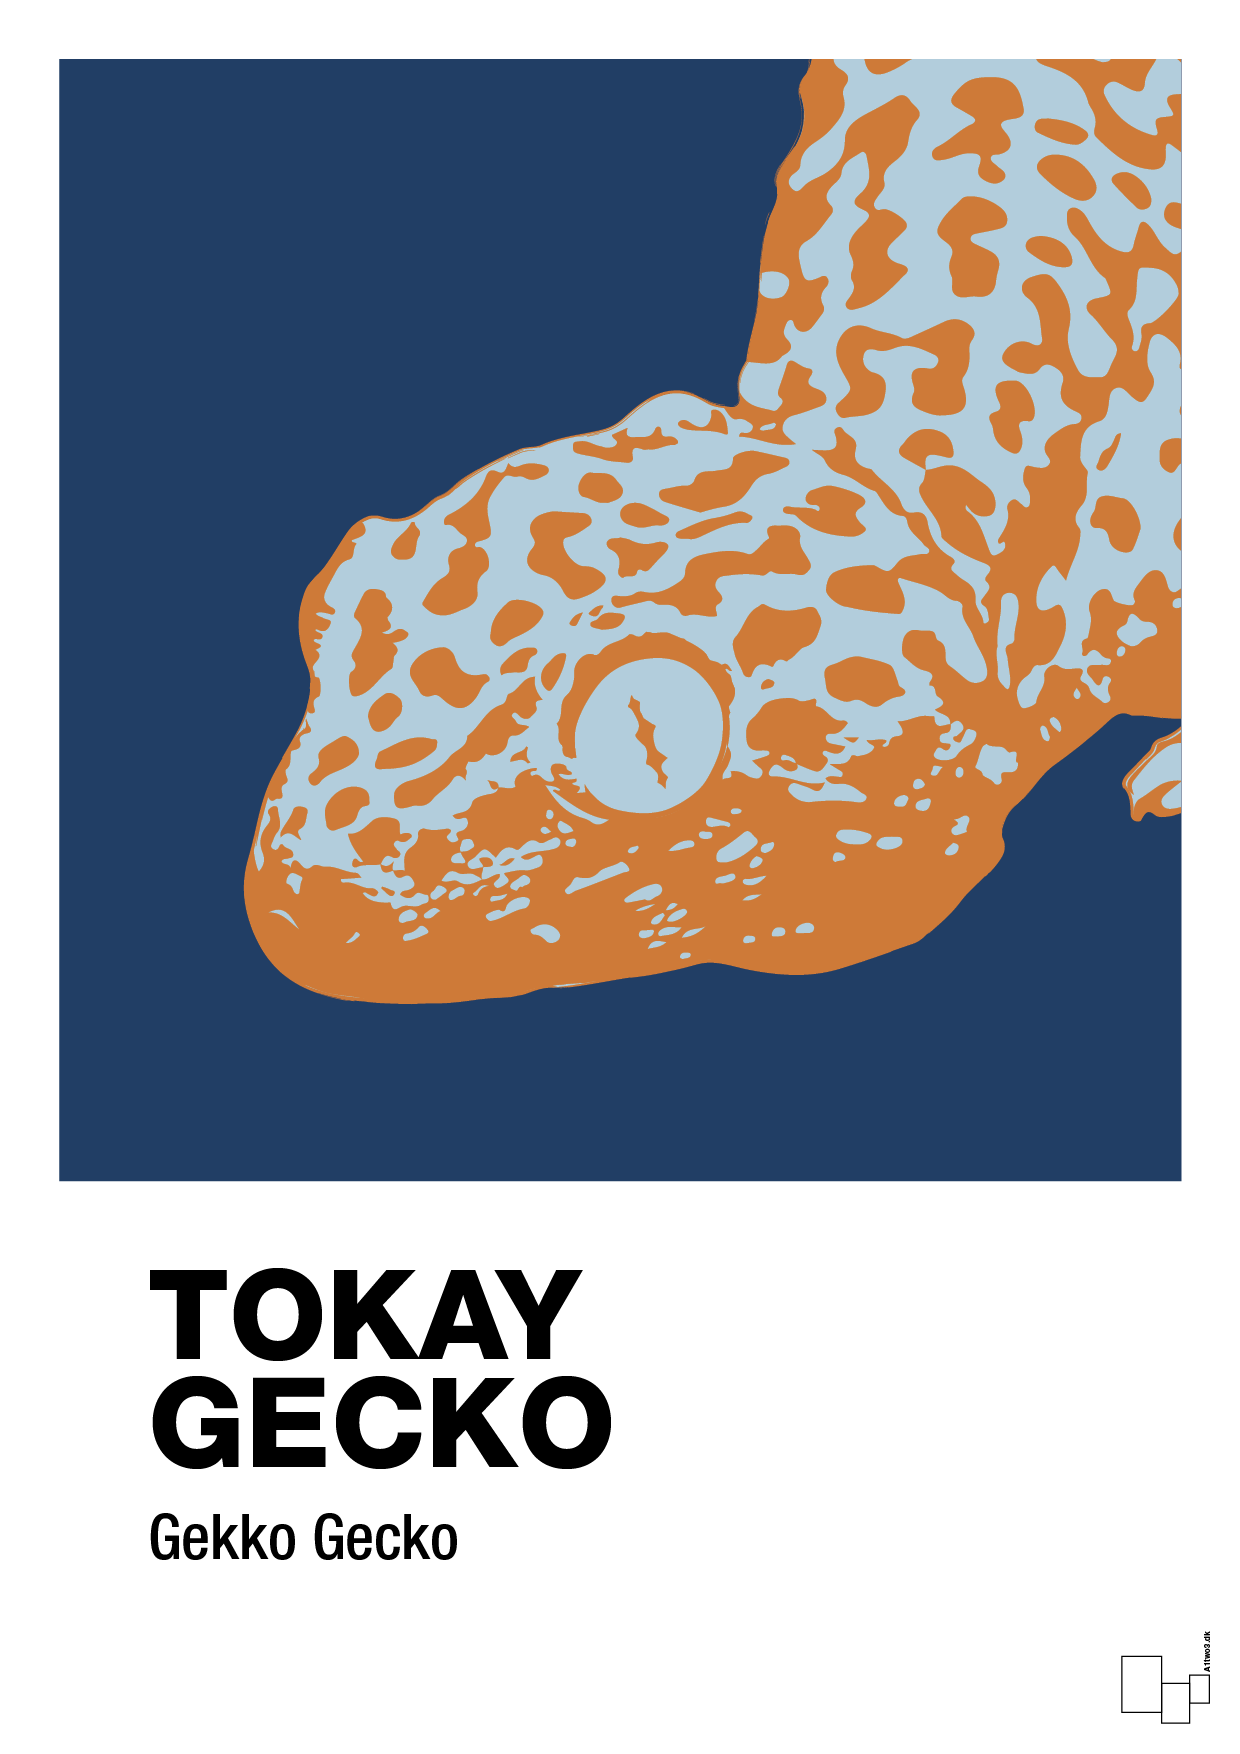 tokay gecko - Plakat med Videnskab i Lapis Blue